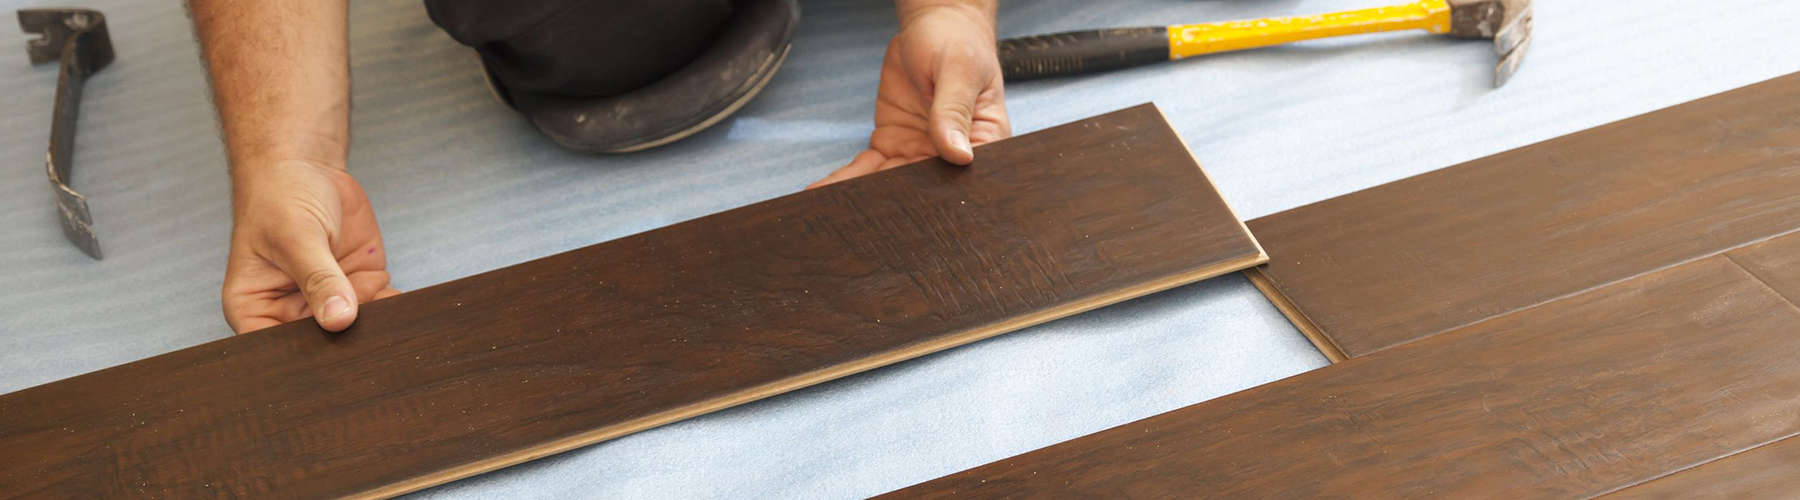 How To Install Vinyl Plank Flooring, How To Install Vinyl Tile On Wood Floor